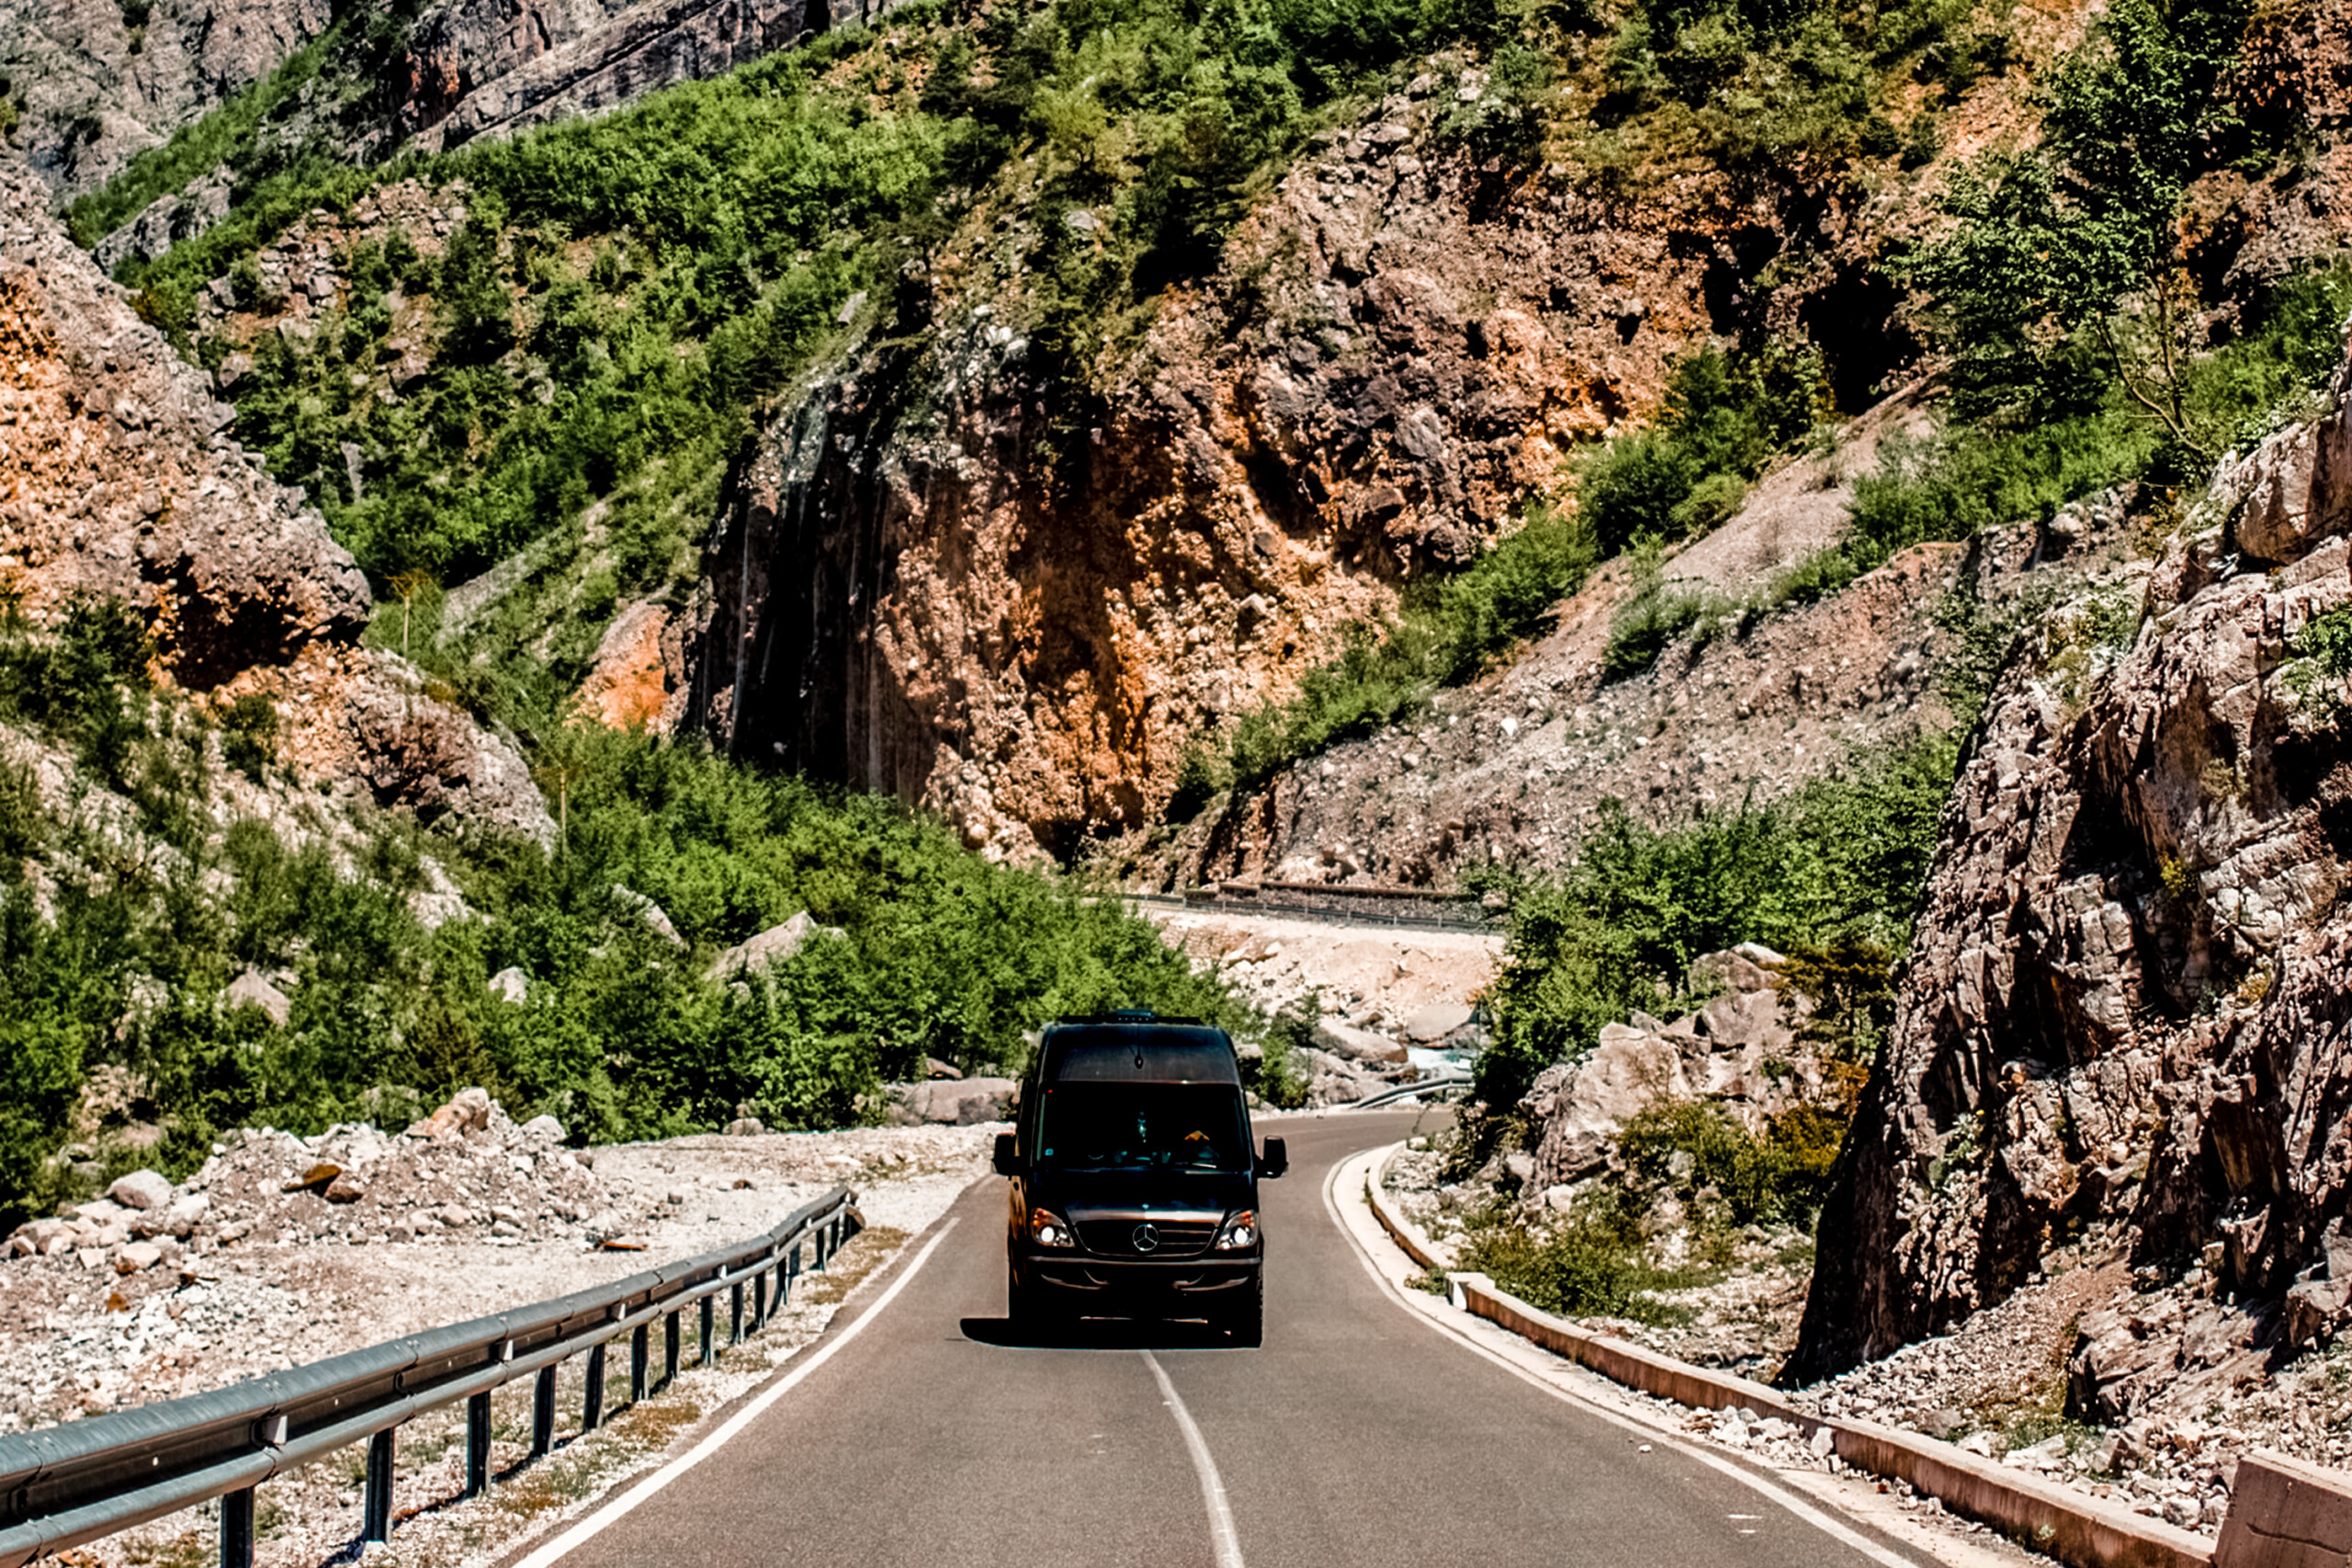 A black sprinter van driving on a highway through mountains